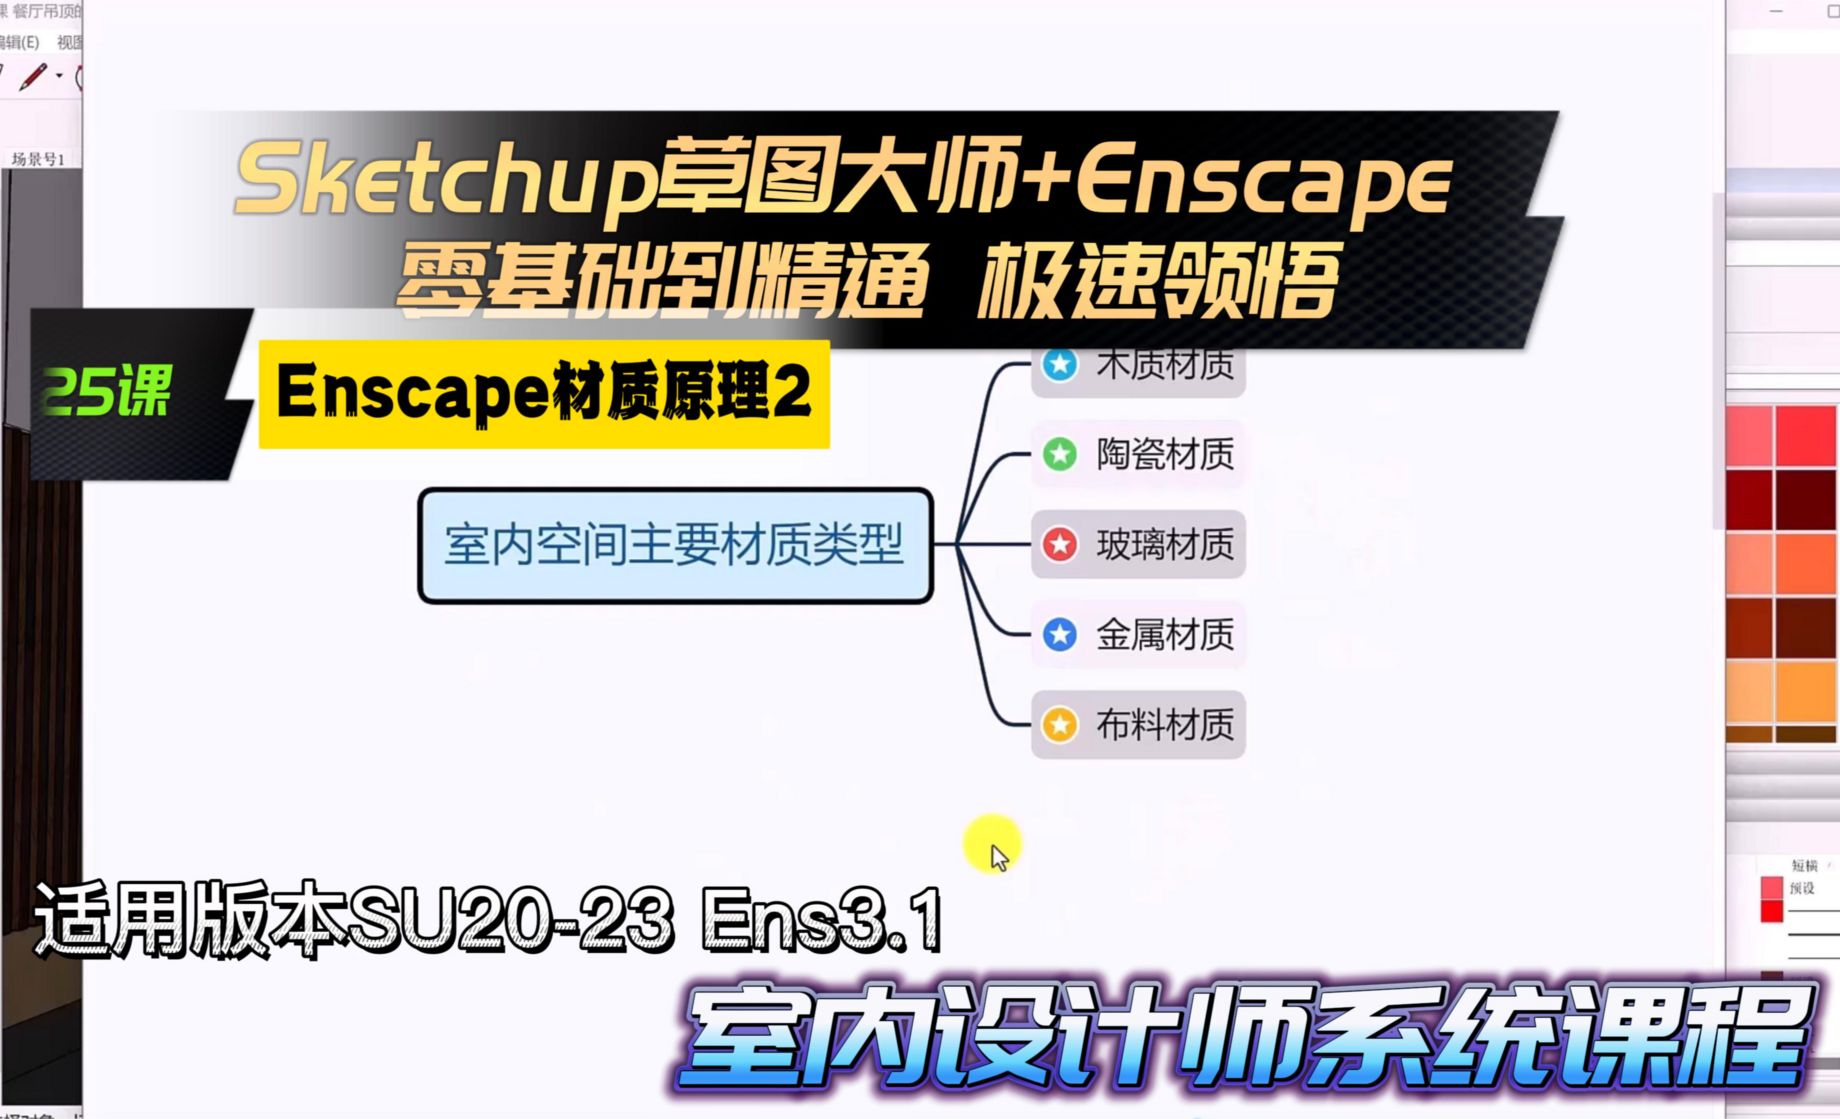 Sketchup草图大师+Enscape 室内设计极速领悟教程25课 Enscape材质原理2